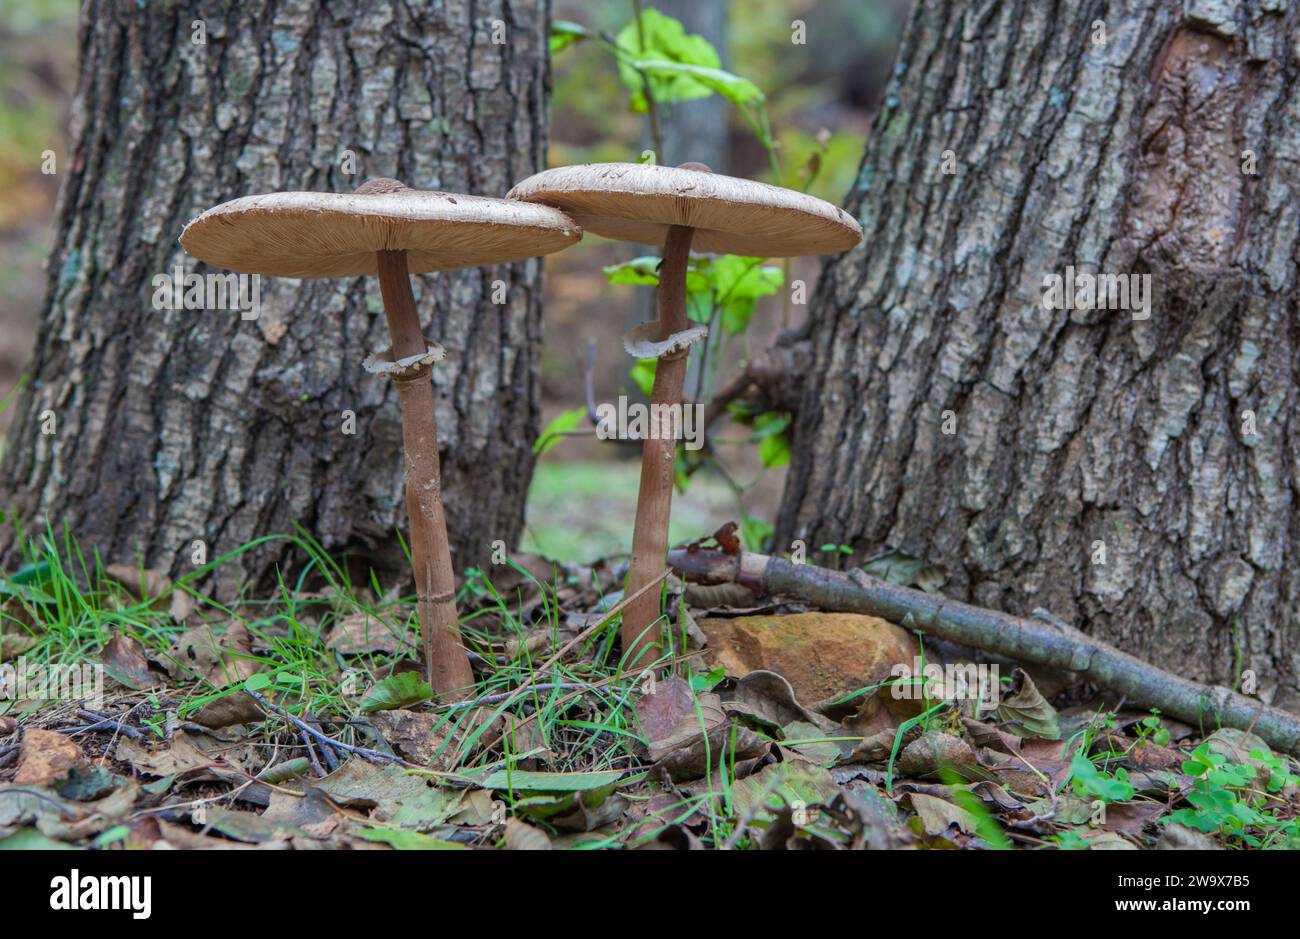 Parasol mushrooms growing close to tree base. Ground view Stock Photo